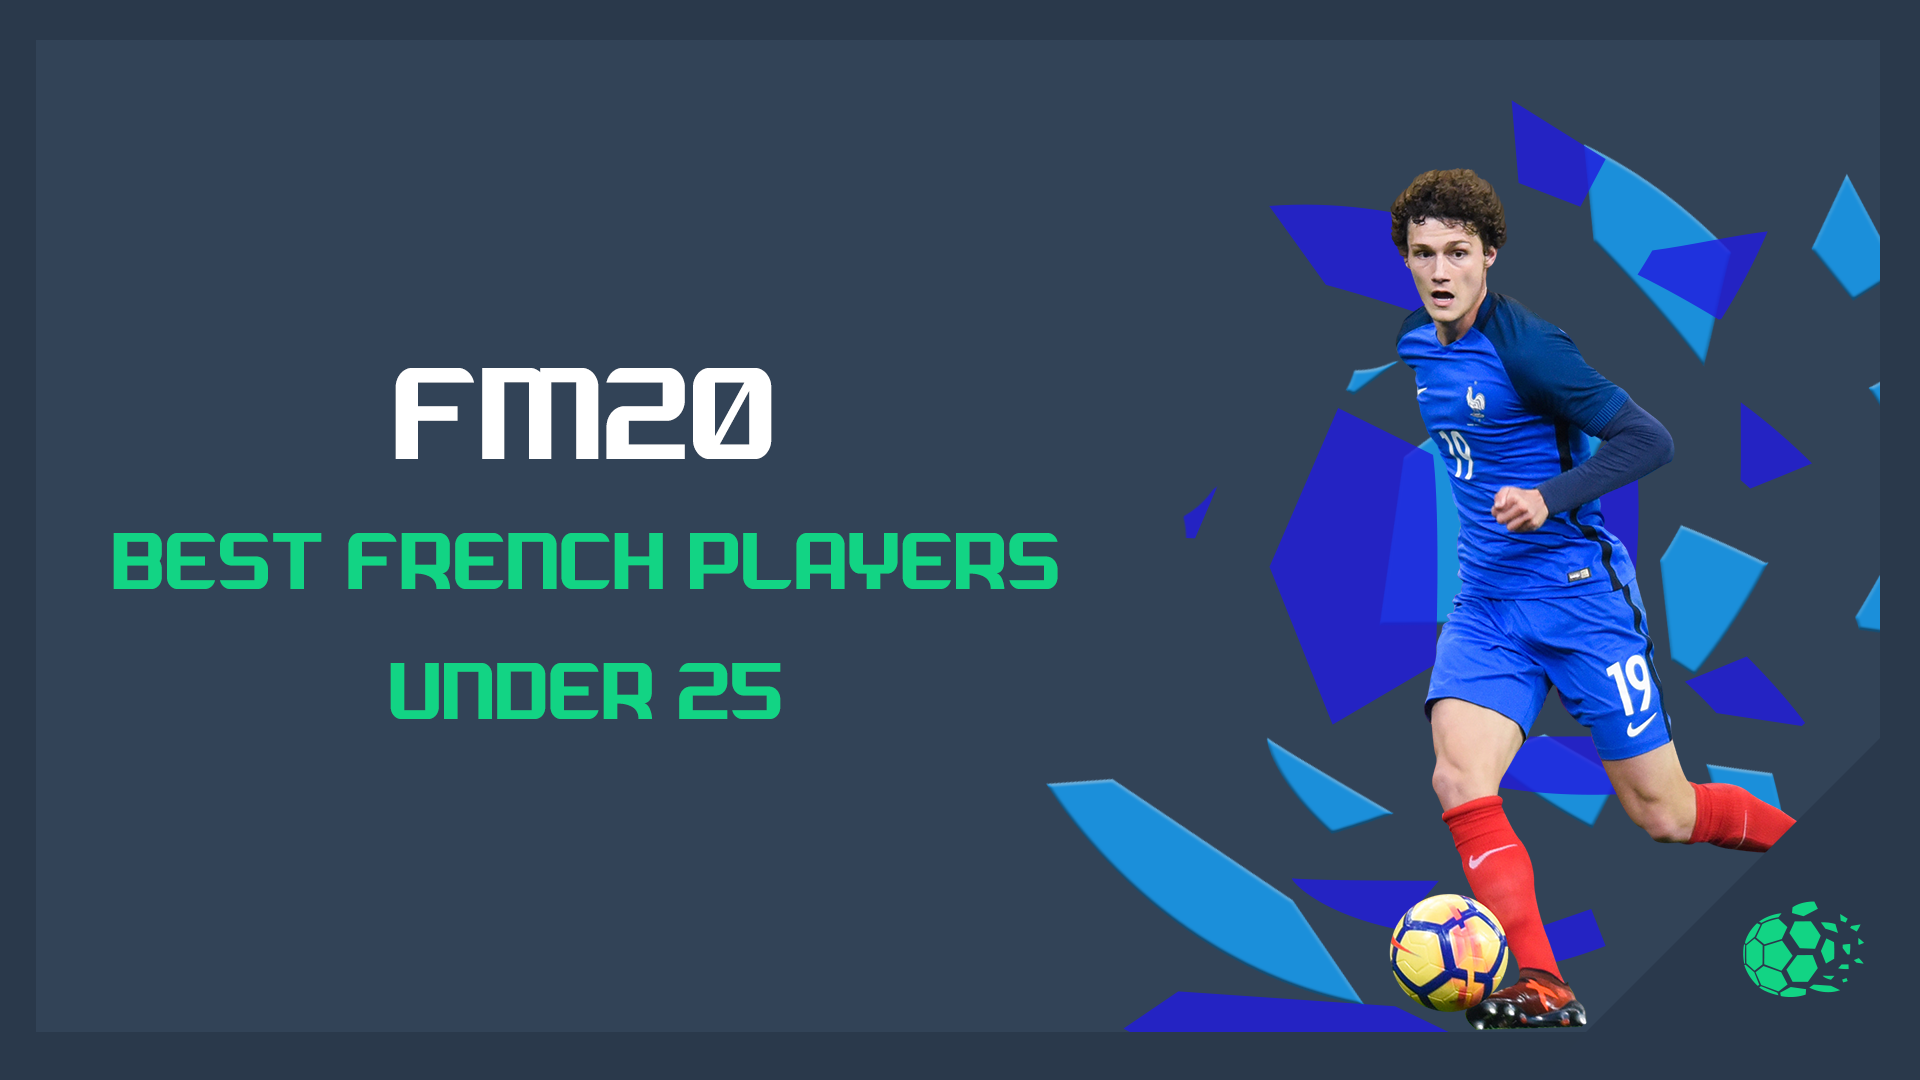 FM20 FM20: Best French Player Under 25